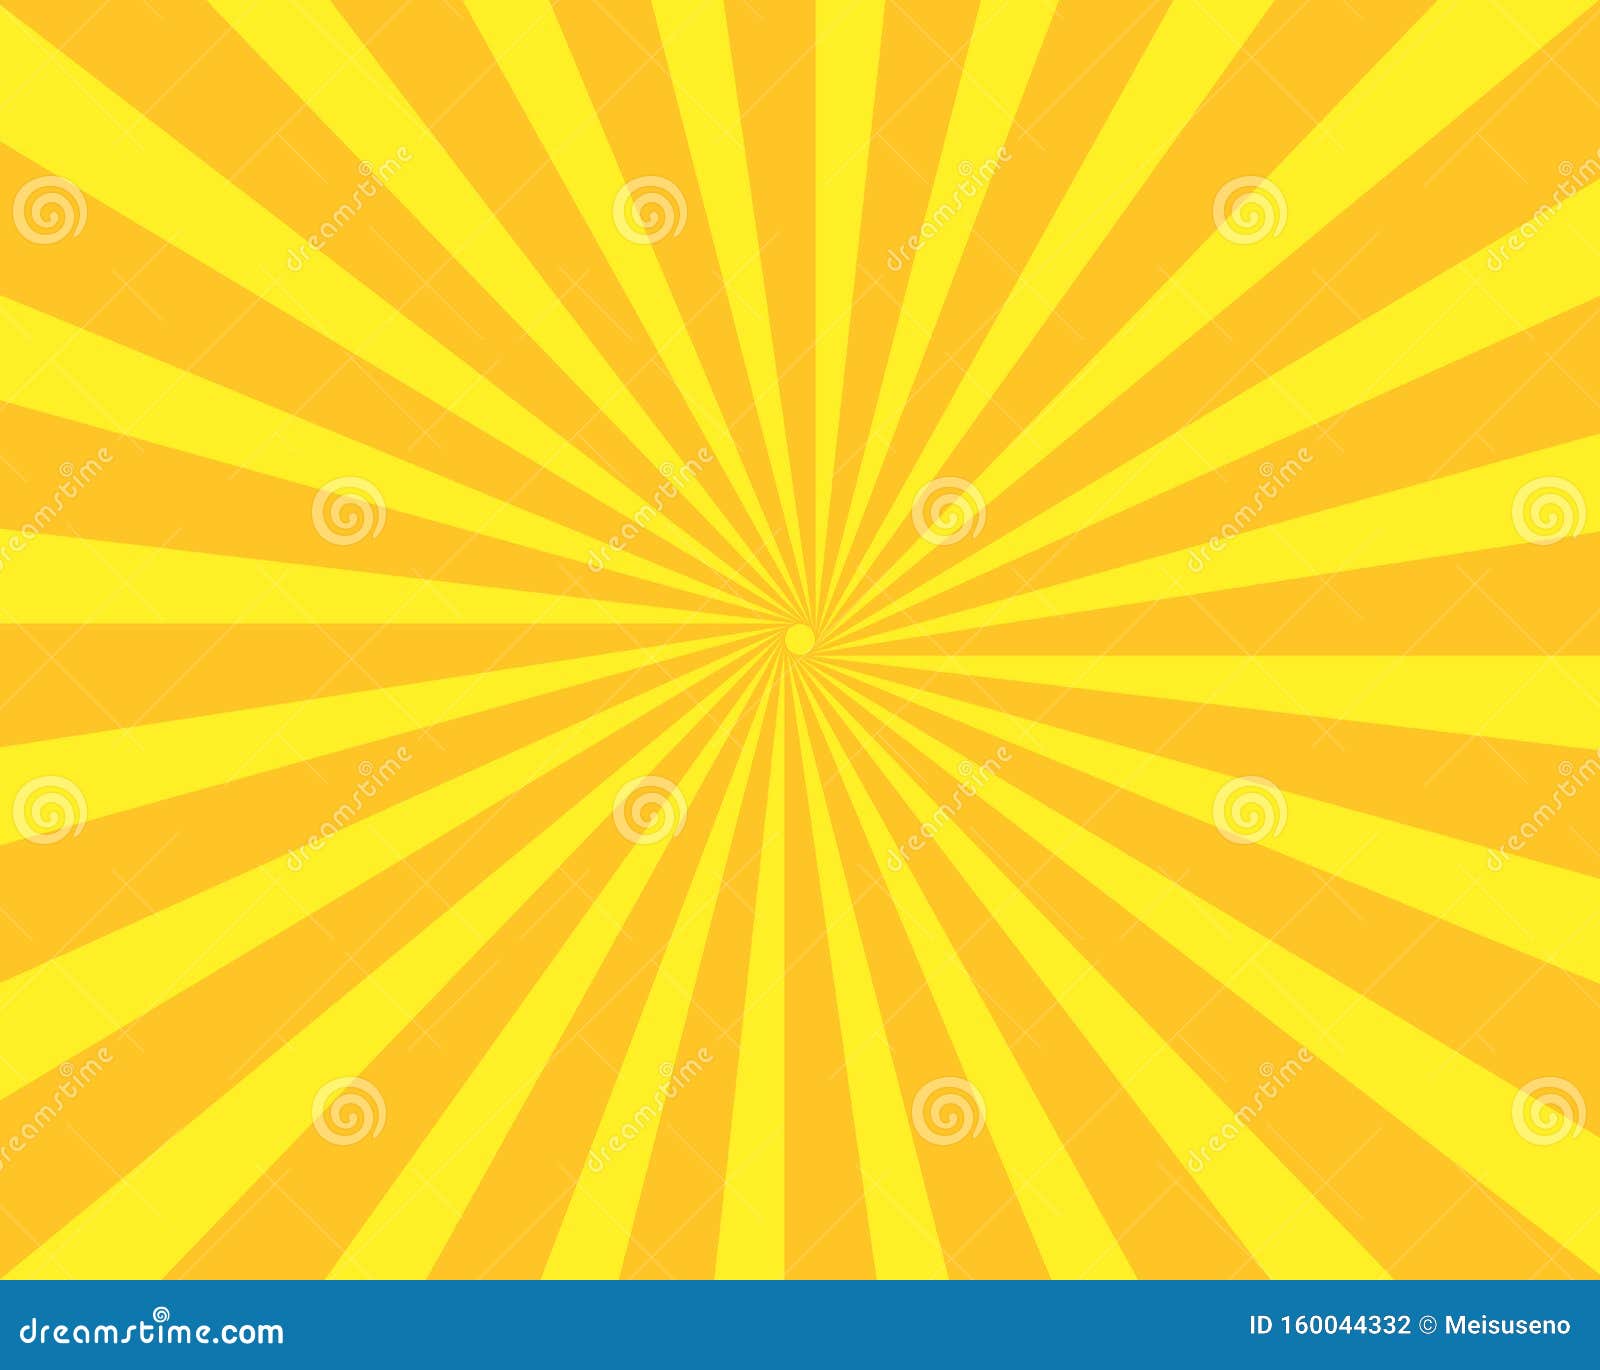 Sunburst Yellow Background Vector Illustration Stock Vector - Illustration  of explosion, bright: 160044332